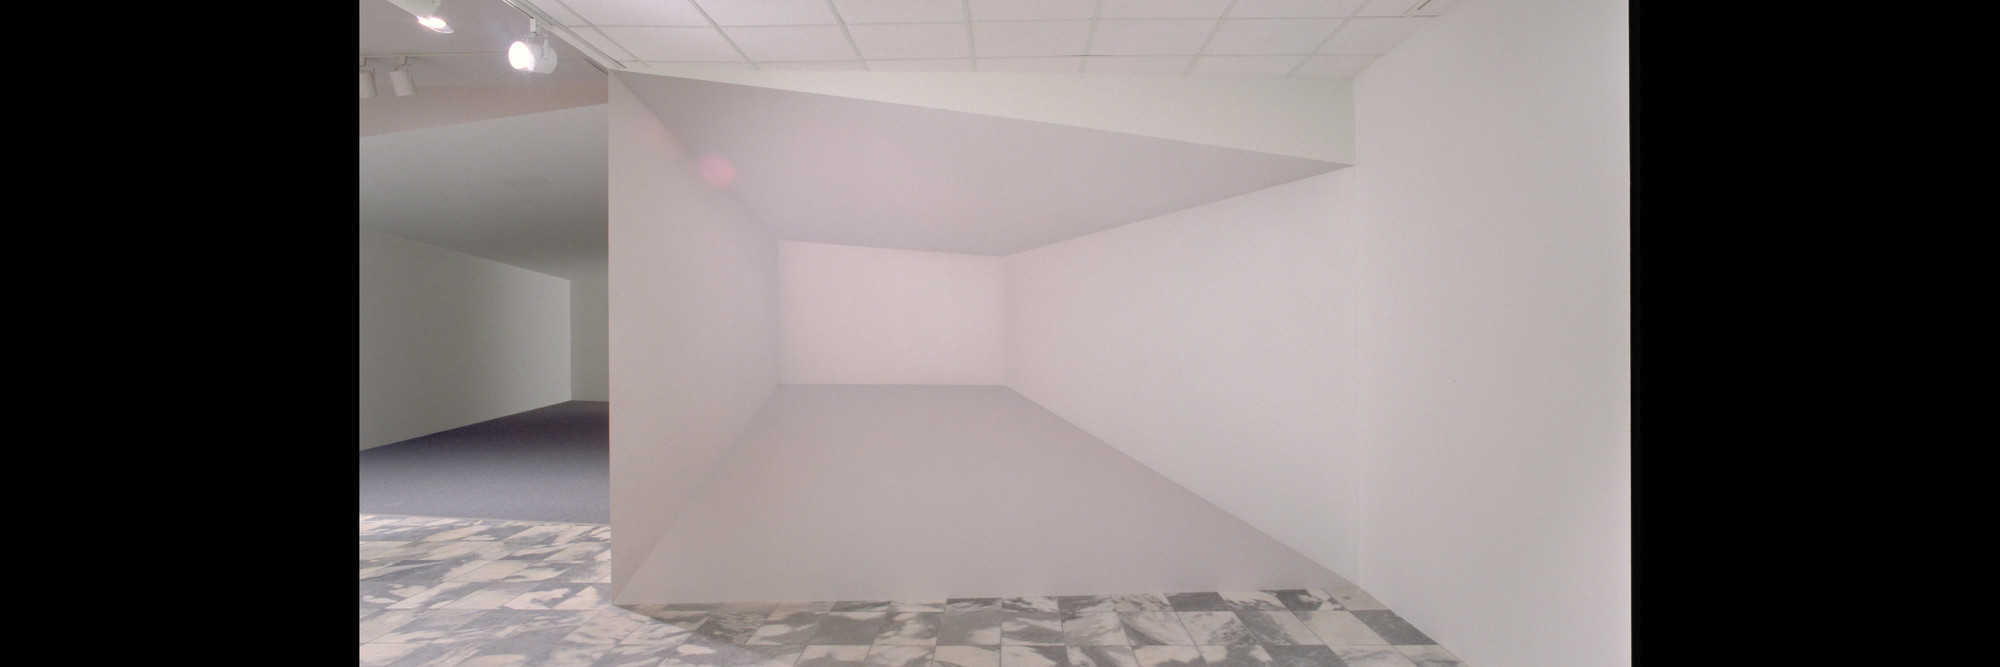 Ricci Albenda. Tesseract. 2001. Installation view. Wallboard, gatorboard, fiberglass, aluminum, paint, and light, 25 × 30 × 10′ (762 × 914.4 × 304.8 cm) (approx.). Courtesy Andrew Kreps Gallery, New York